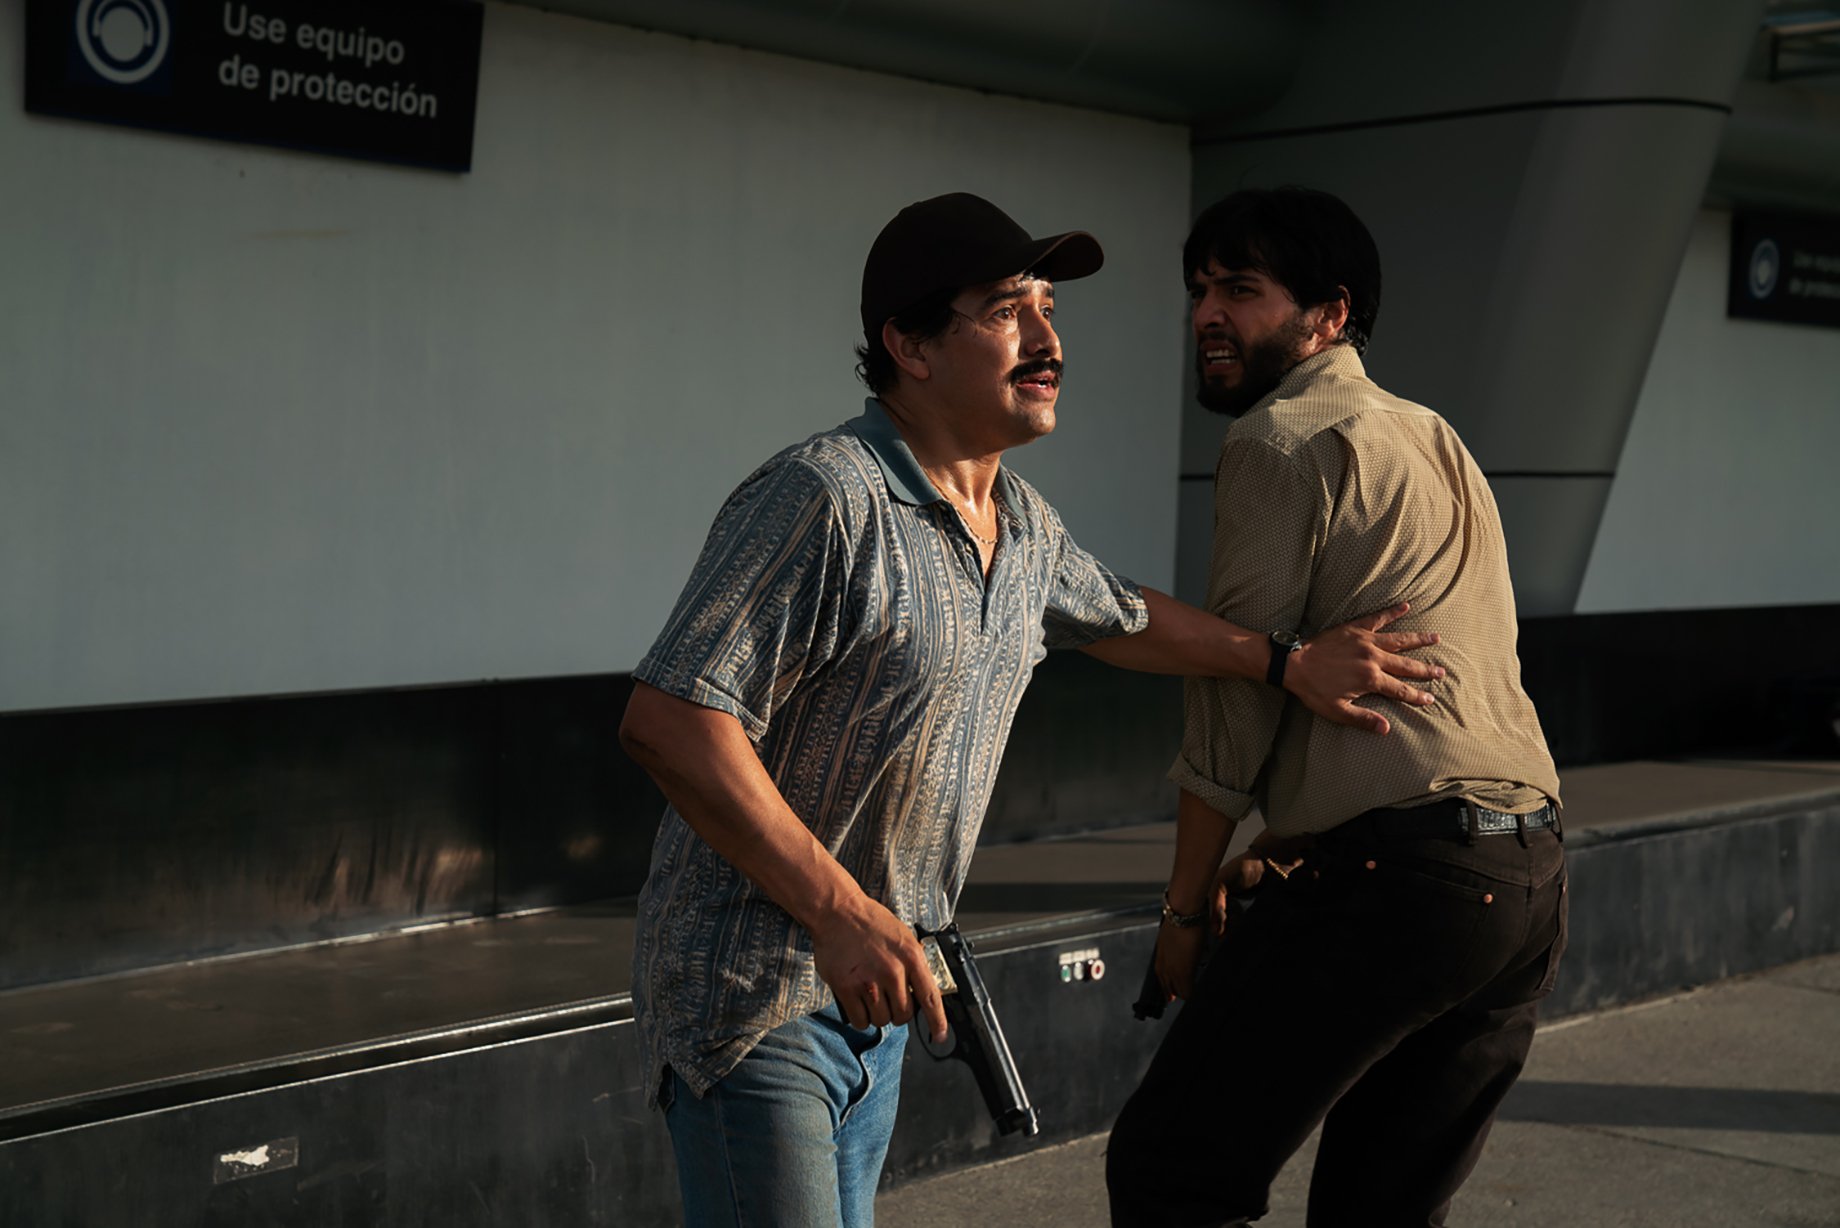 Two men run through airport for Narcos: Mexico season 3 shot by Nicole Franco for Netflix